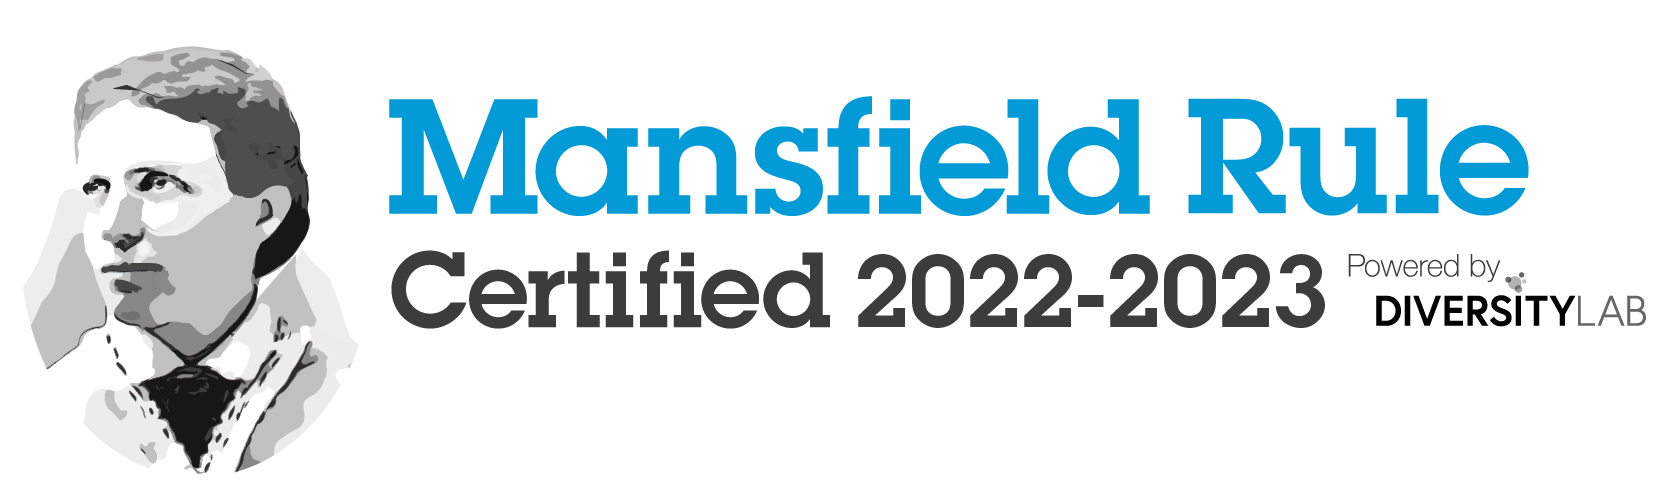 Mansfield Certification 2022-2023